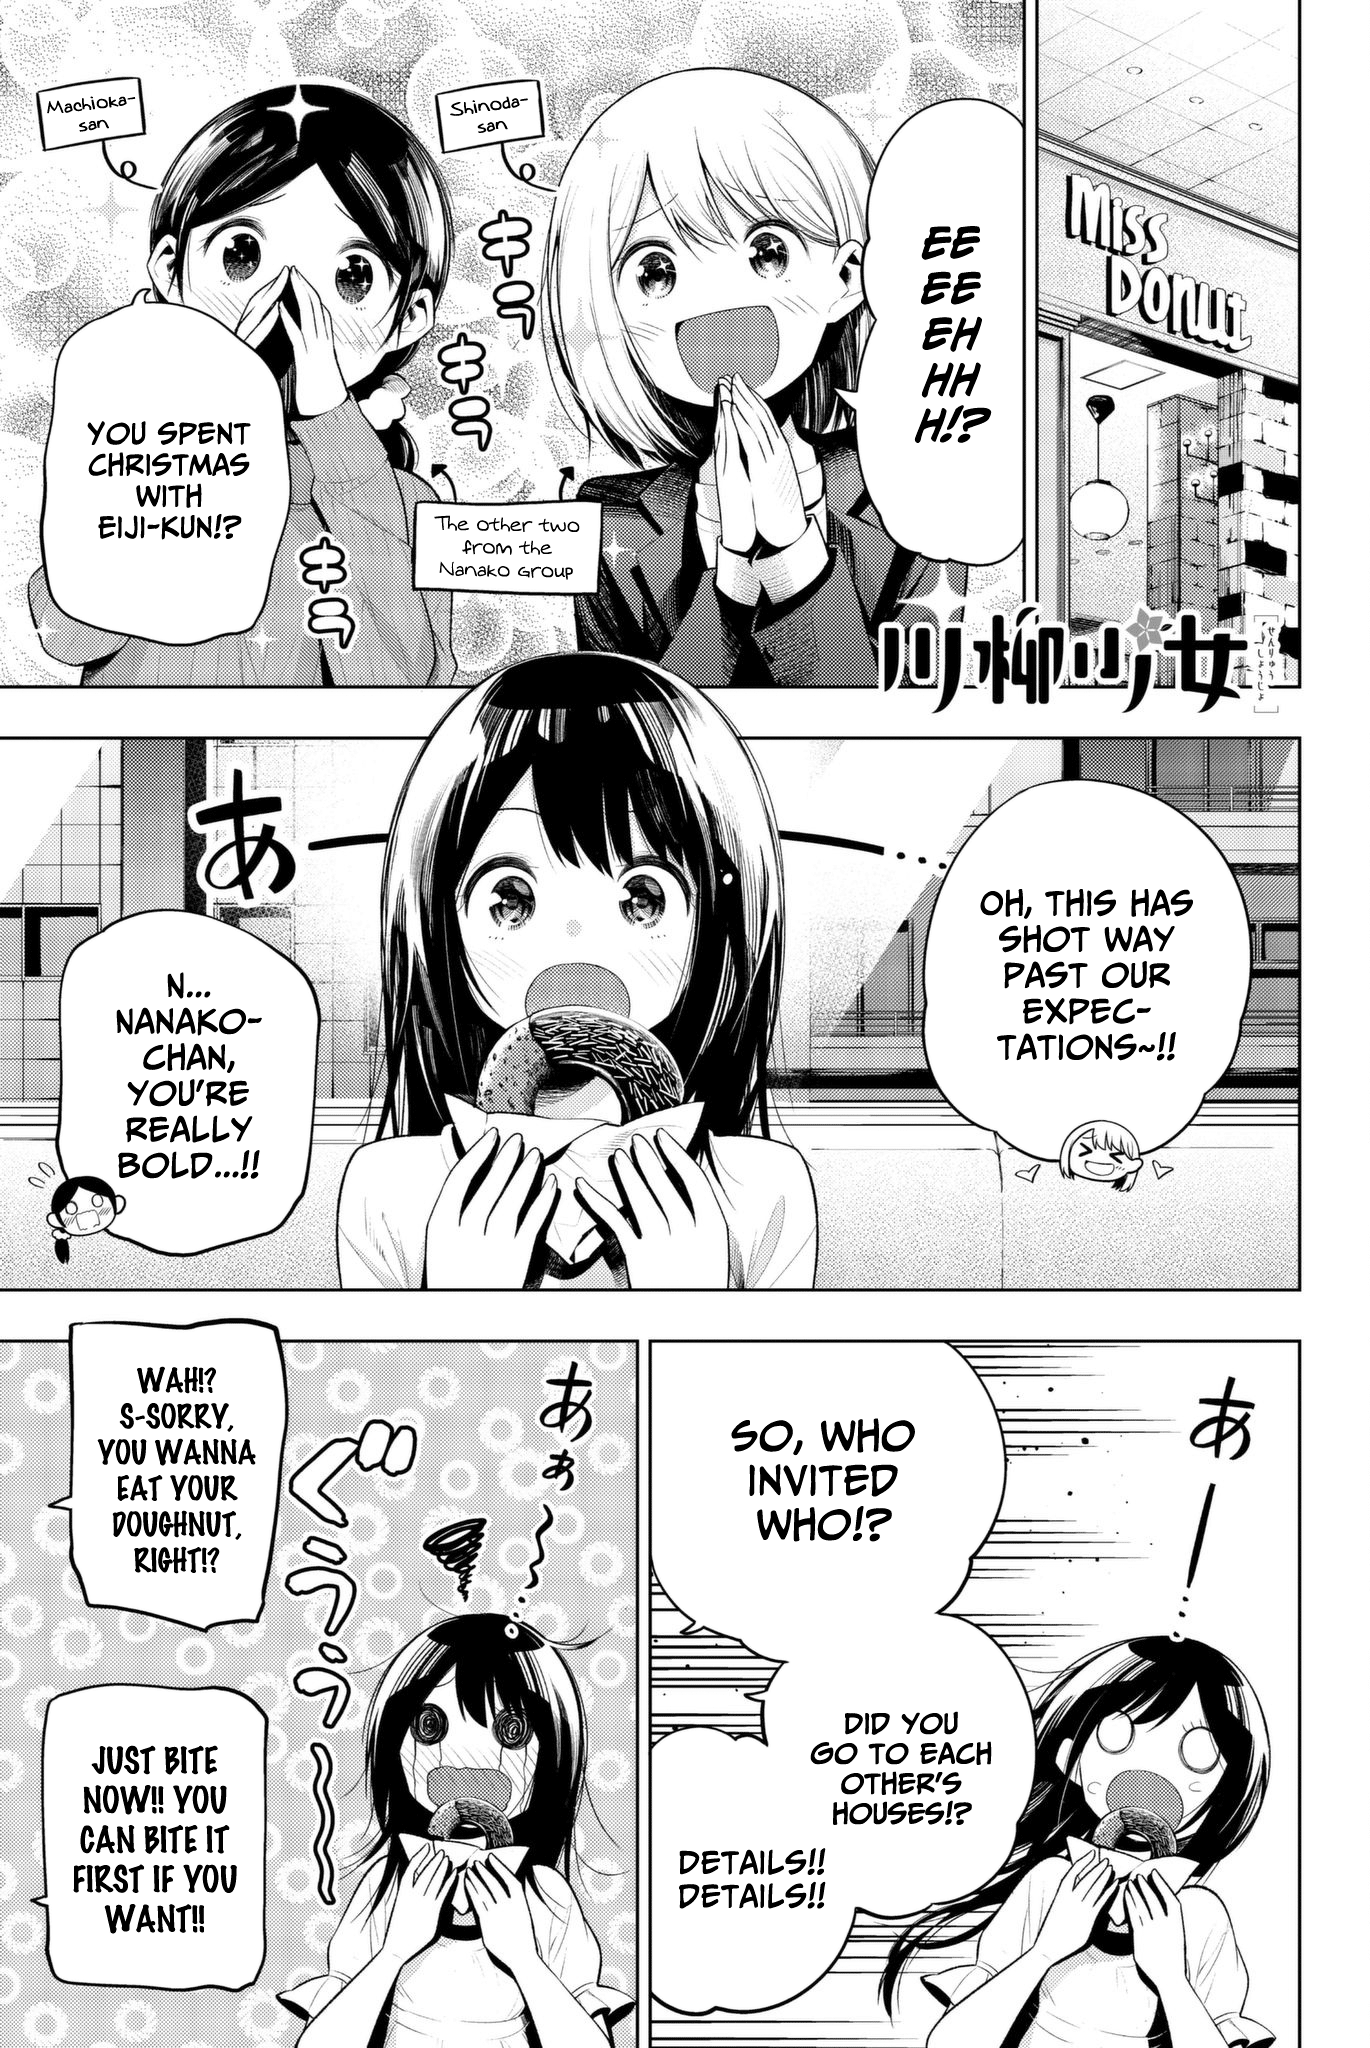 Senryuu Shoujo Vol.7 Chapter 105: Nanako and girls talk